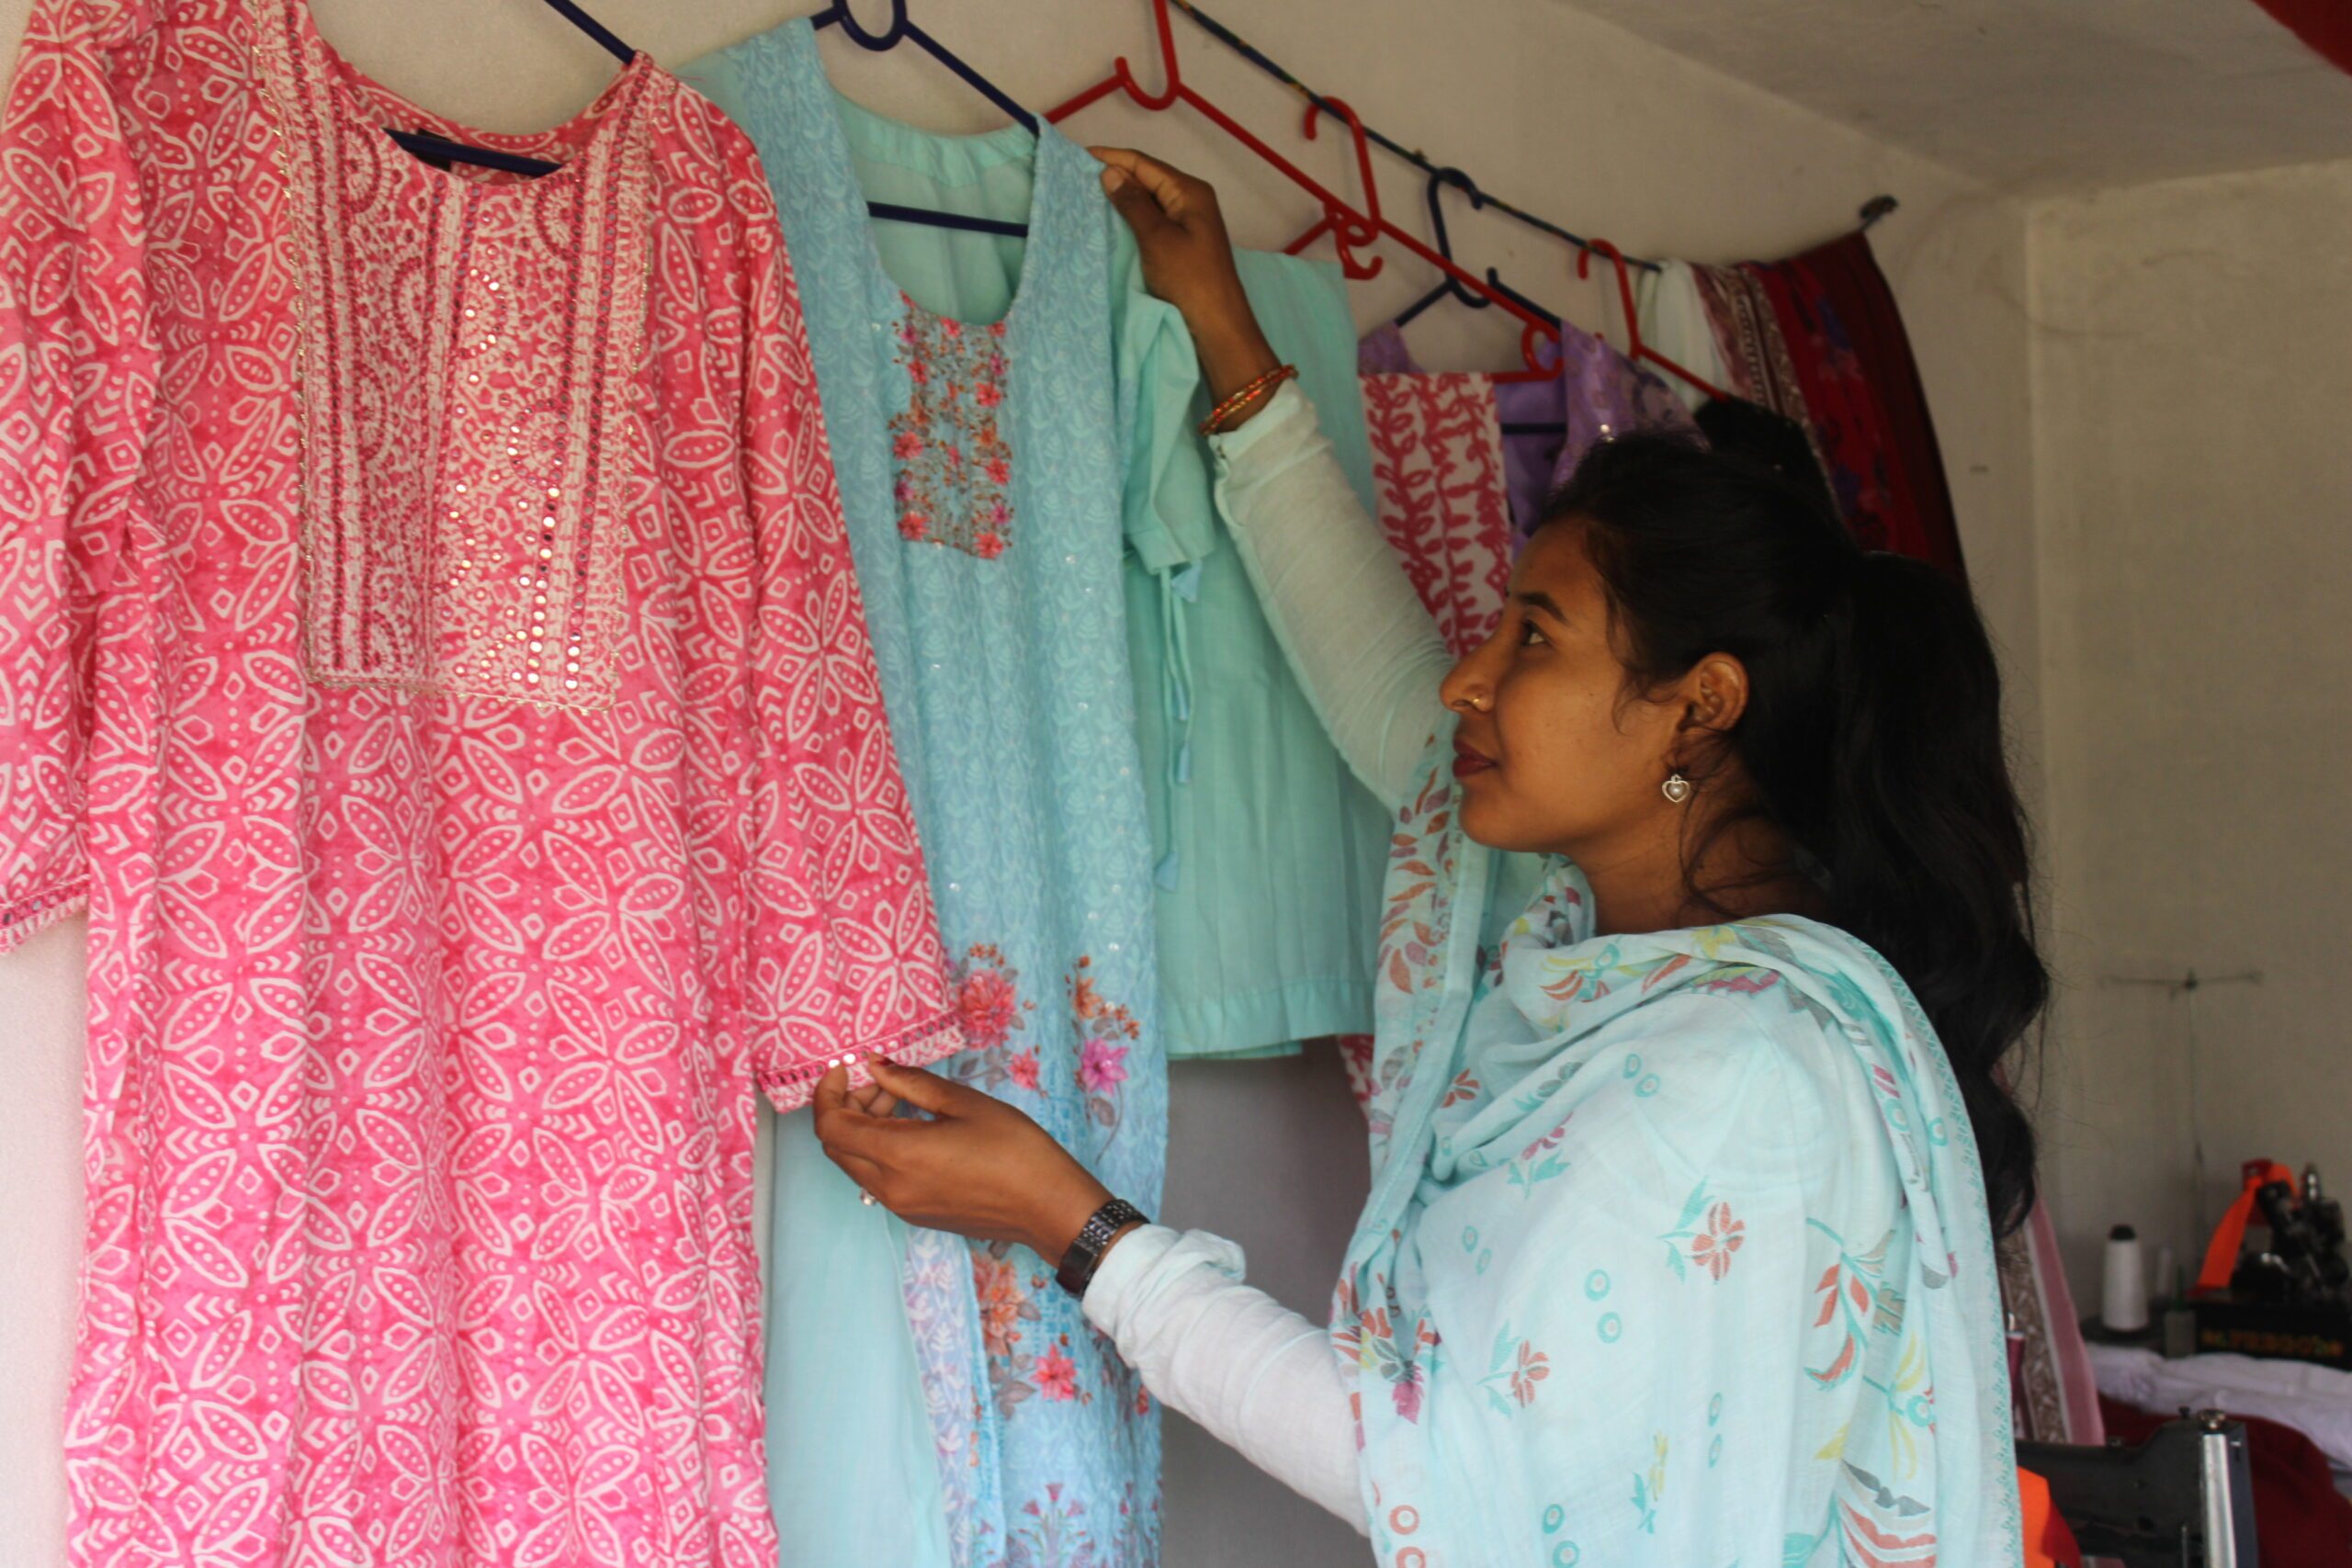 Rishmani arranging dresses in her shop.